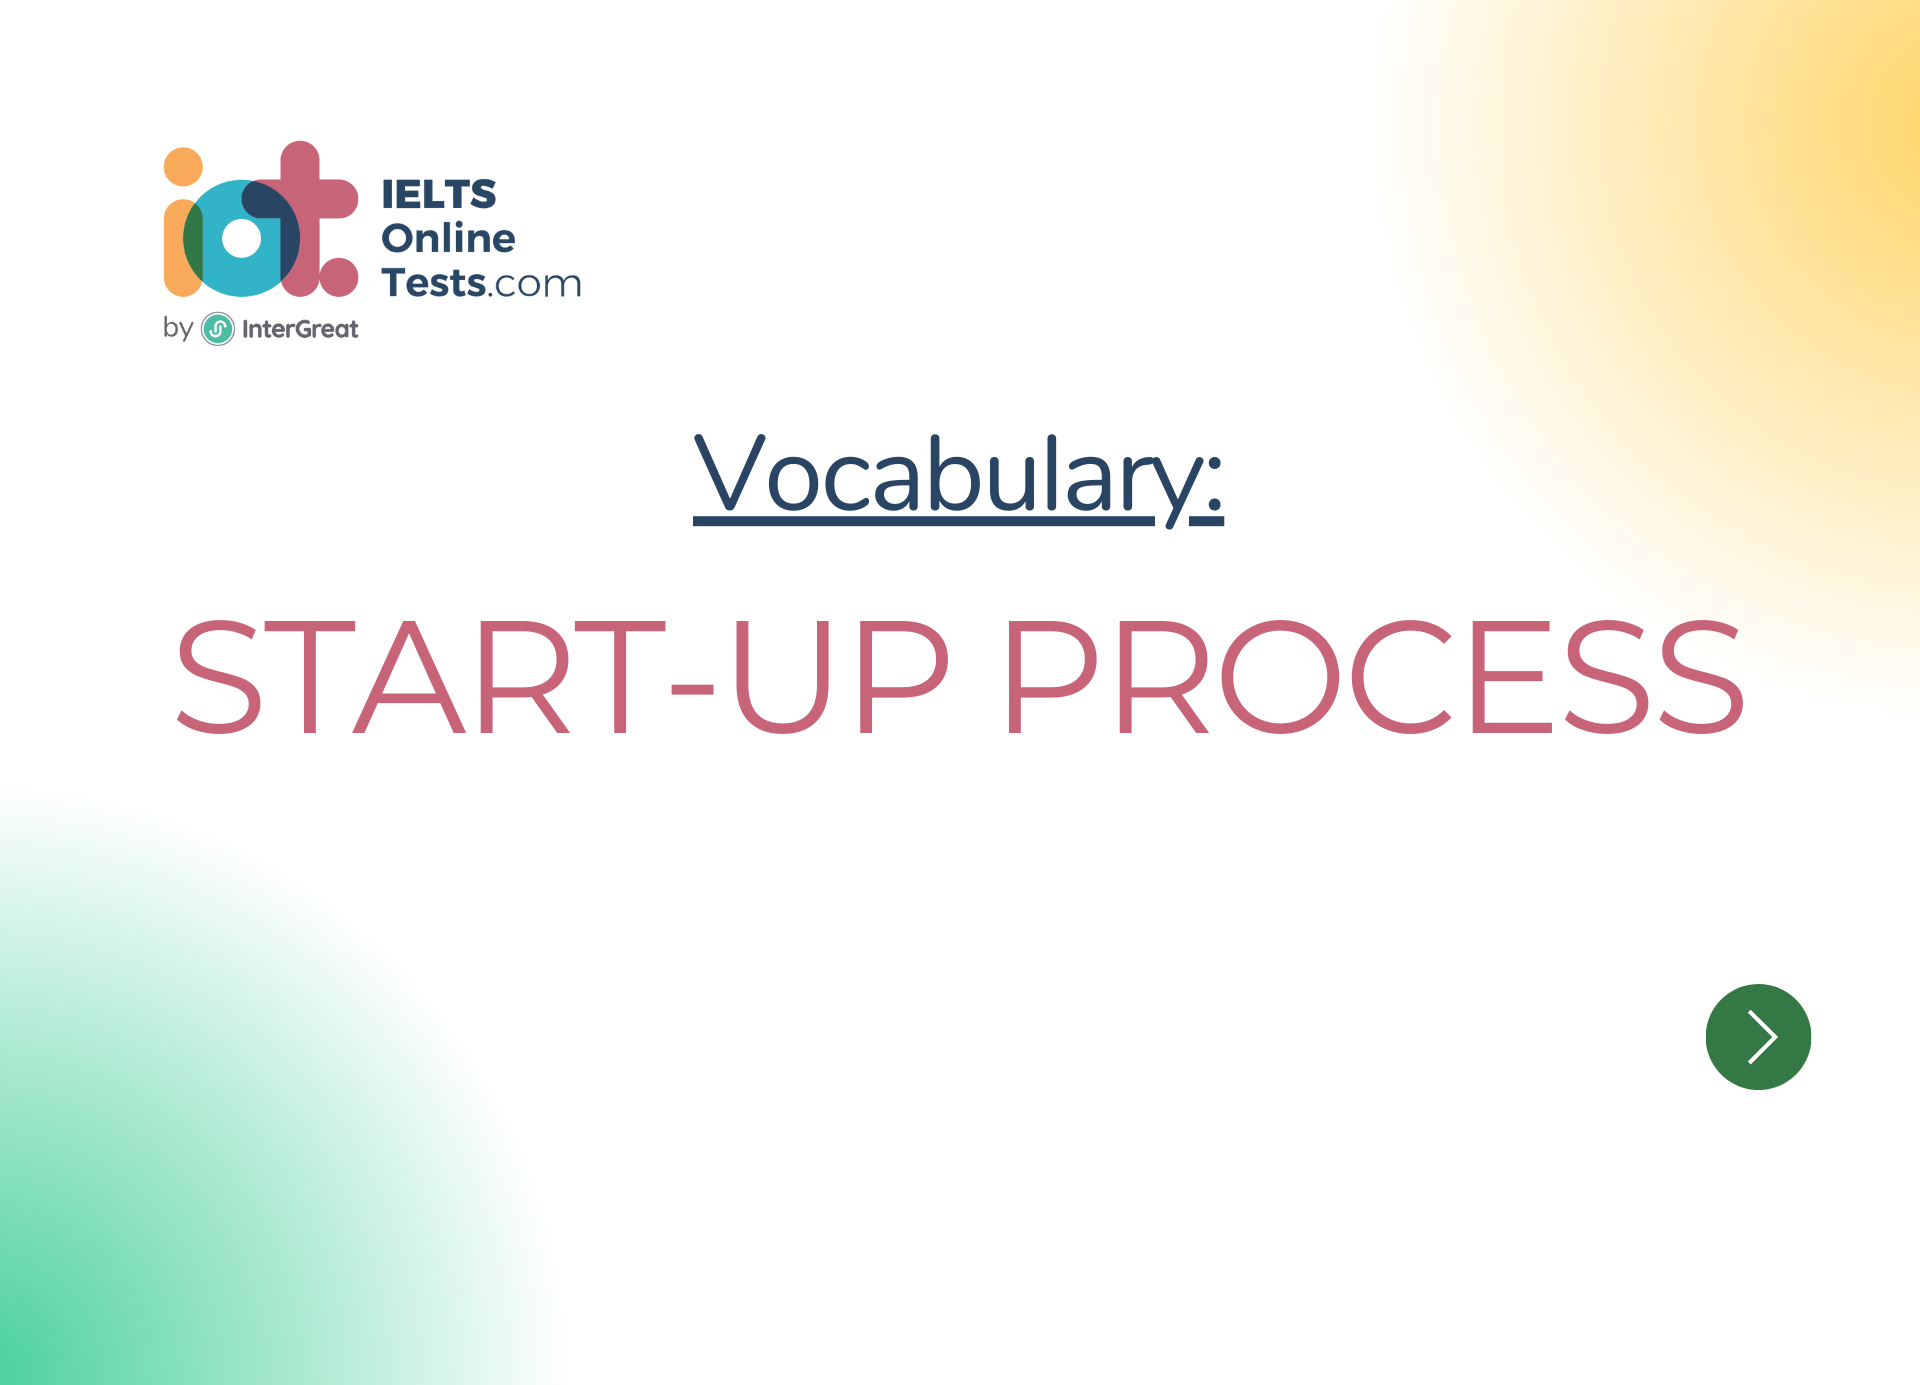 Start-up process